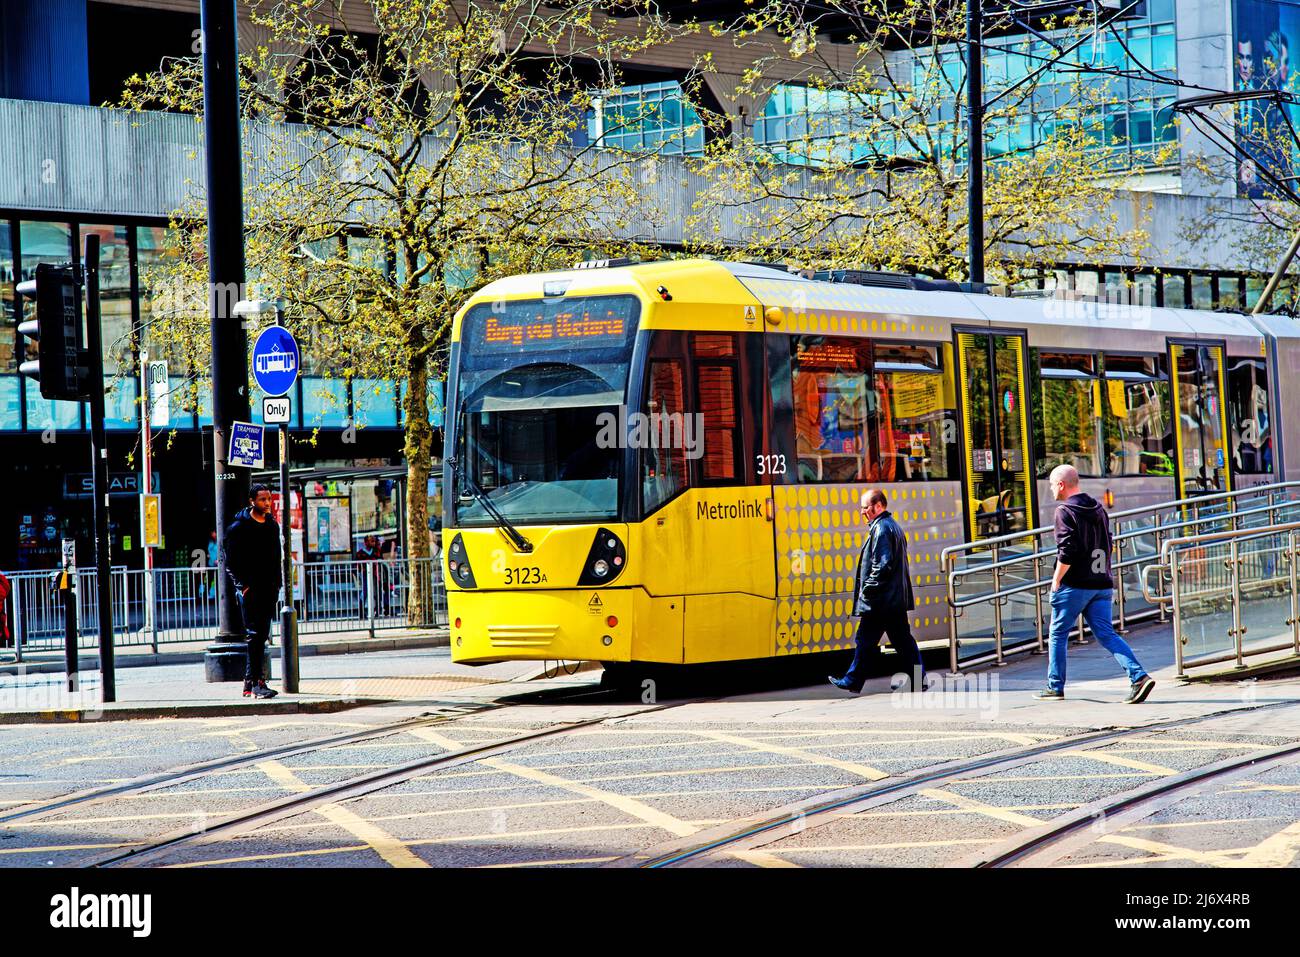 Metro Link Tram, Manchester, England Stock Photo